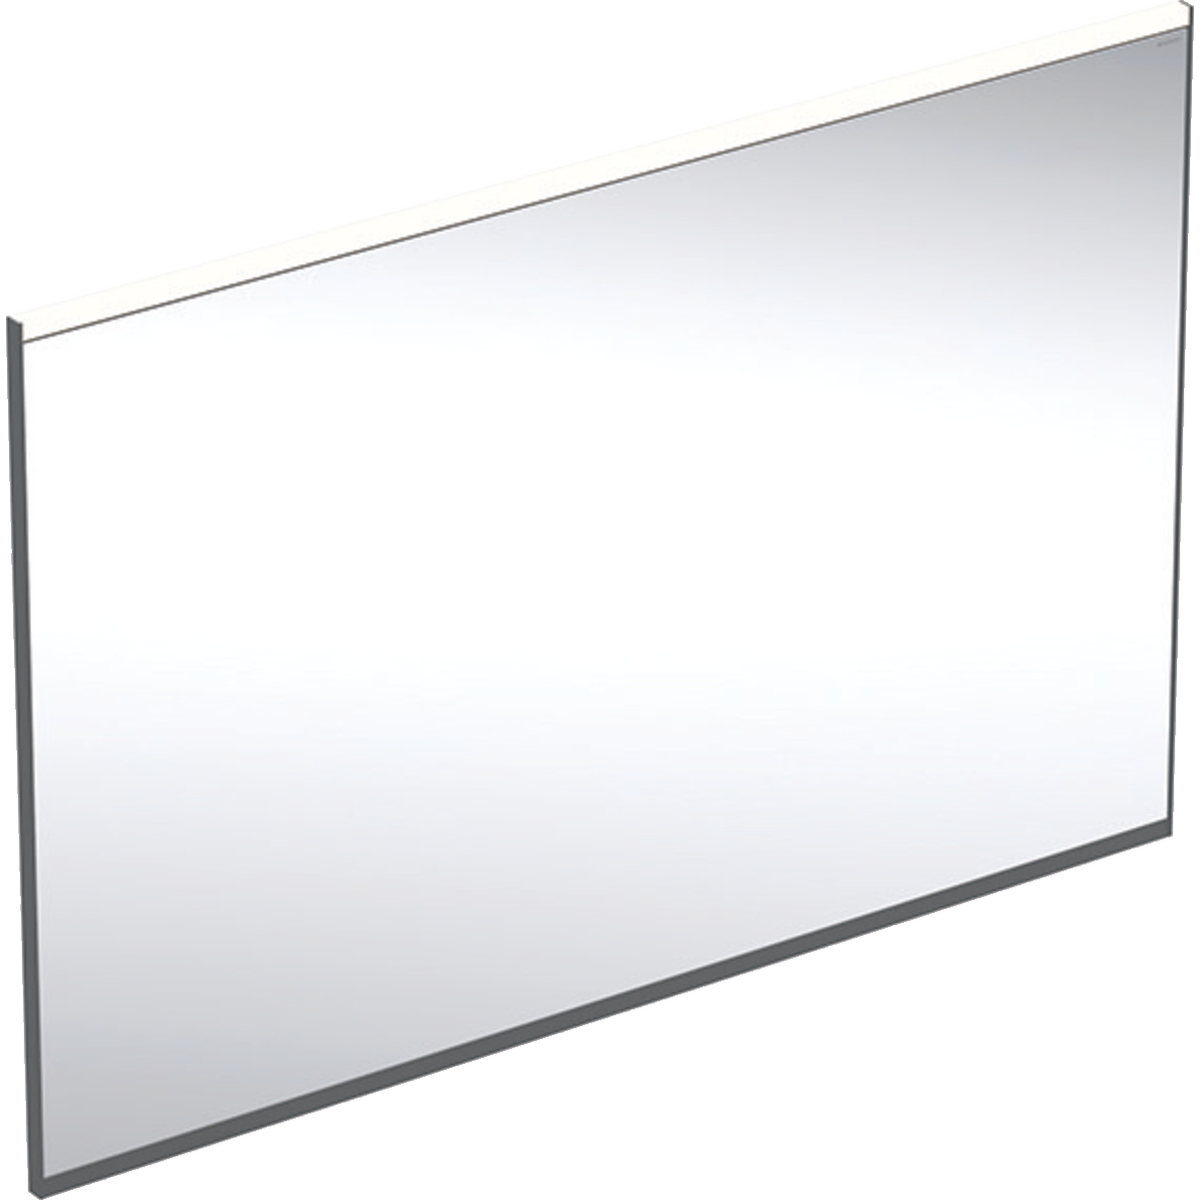 Option Plus Square illuminated mirror with lighting Black matt - 1050mm